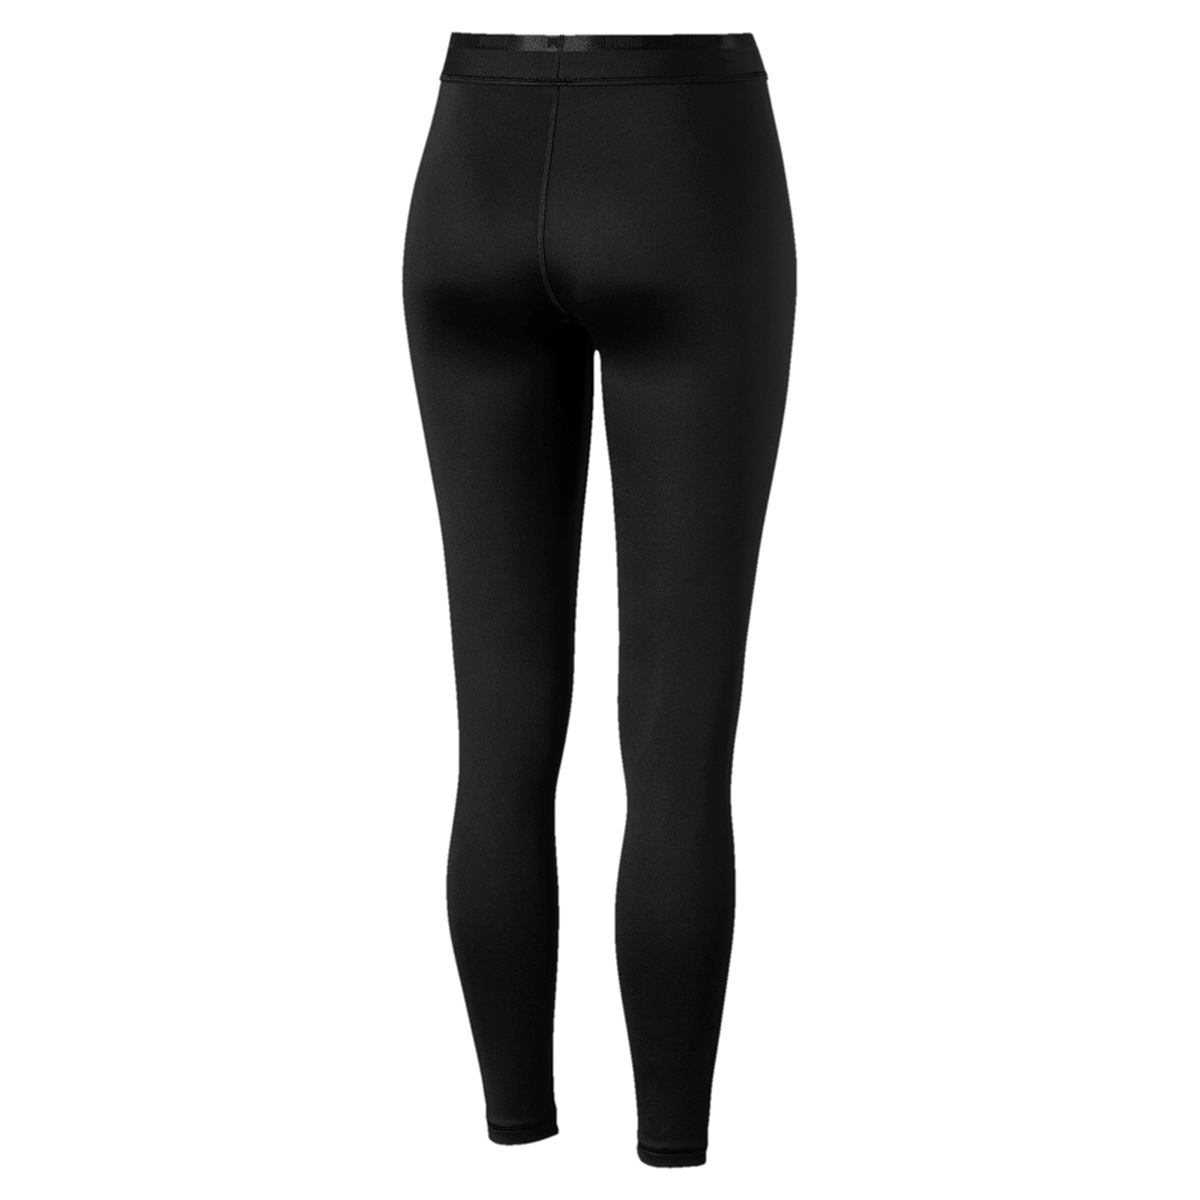 PUMA Damen Soft Sports Leggings Pant Hose Pants Fitnesshose schwarz 843682